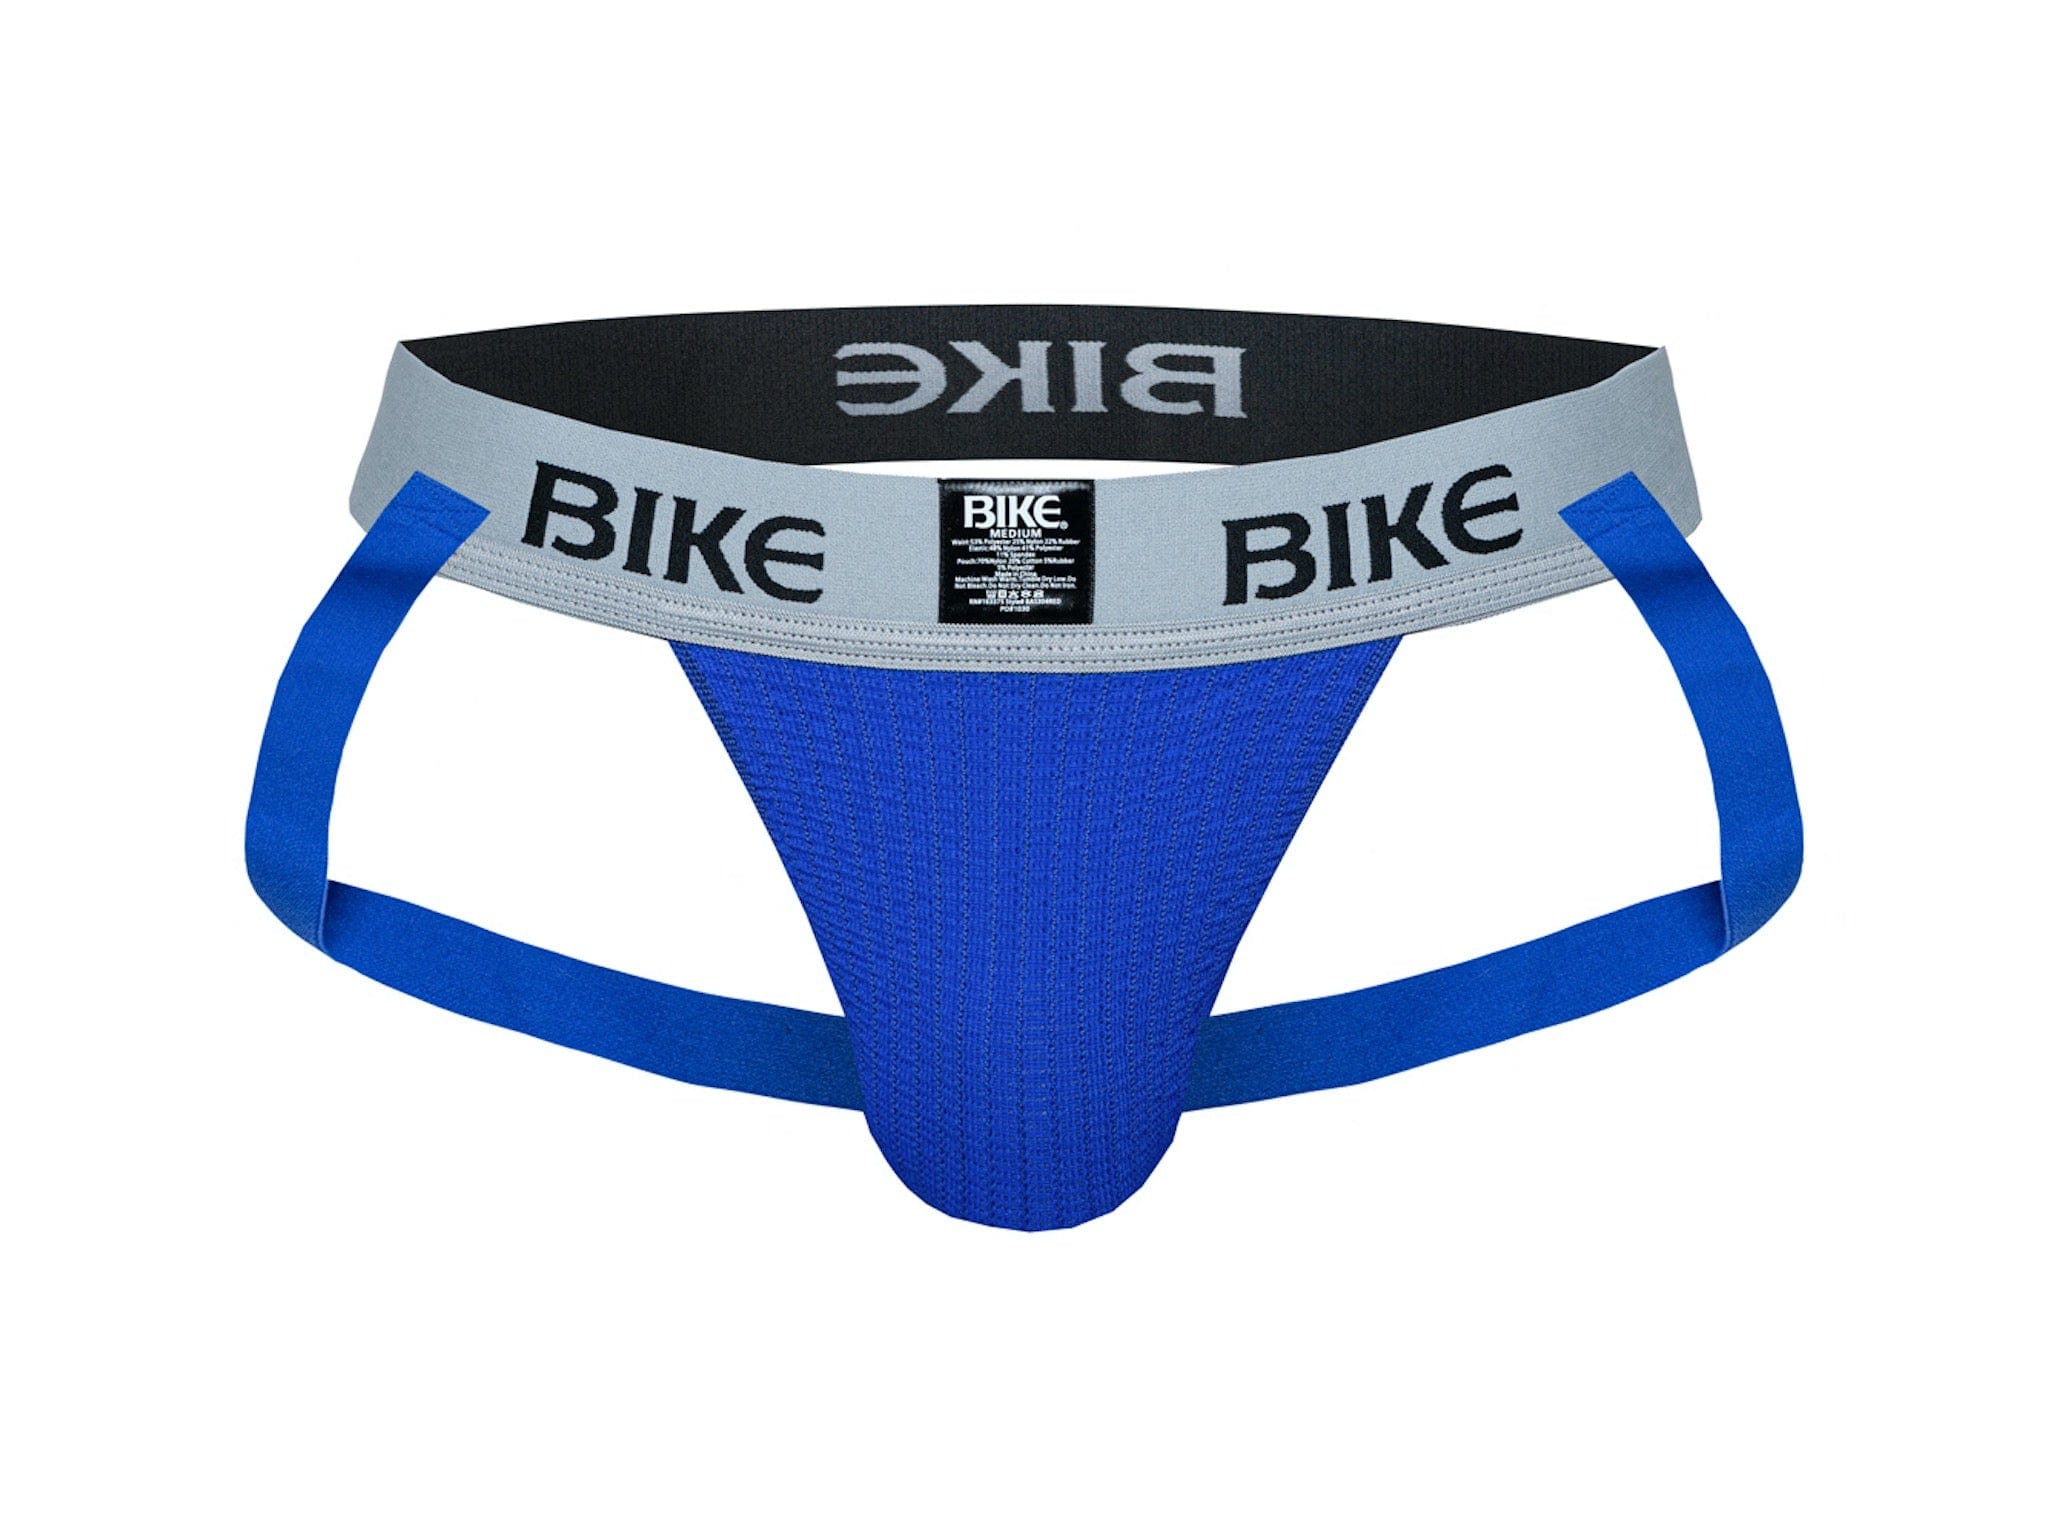 Men's Royal Blue Classic Jockstrap BIKE® Athletic Bike Athletic